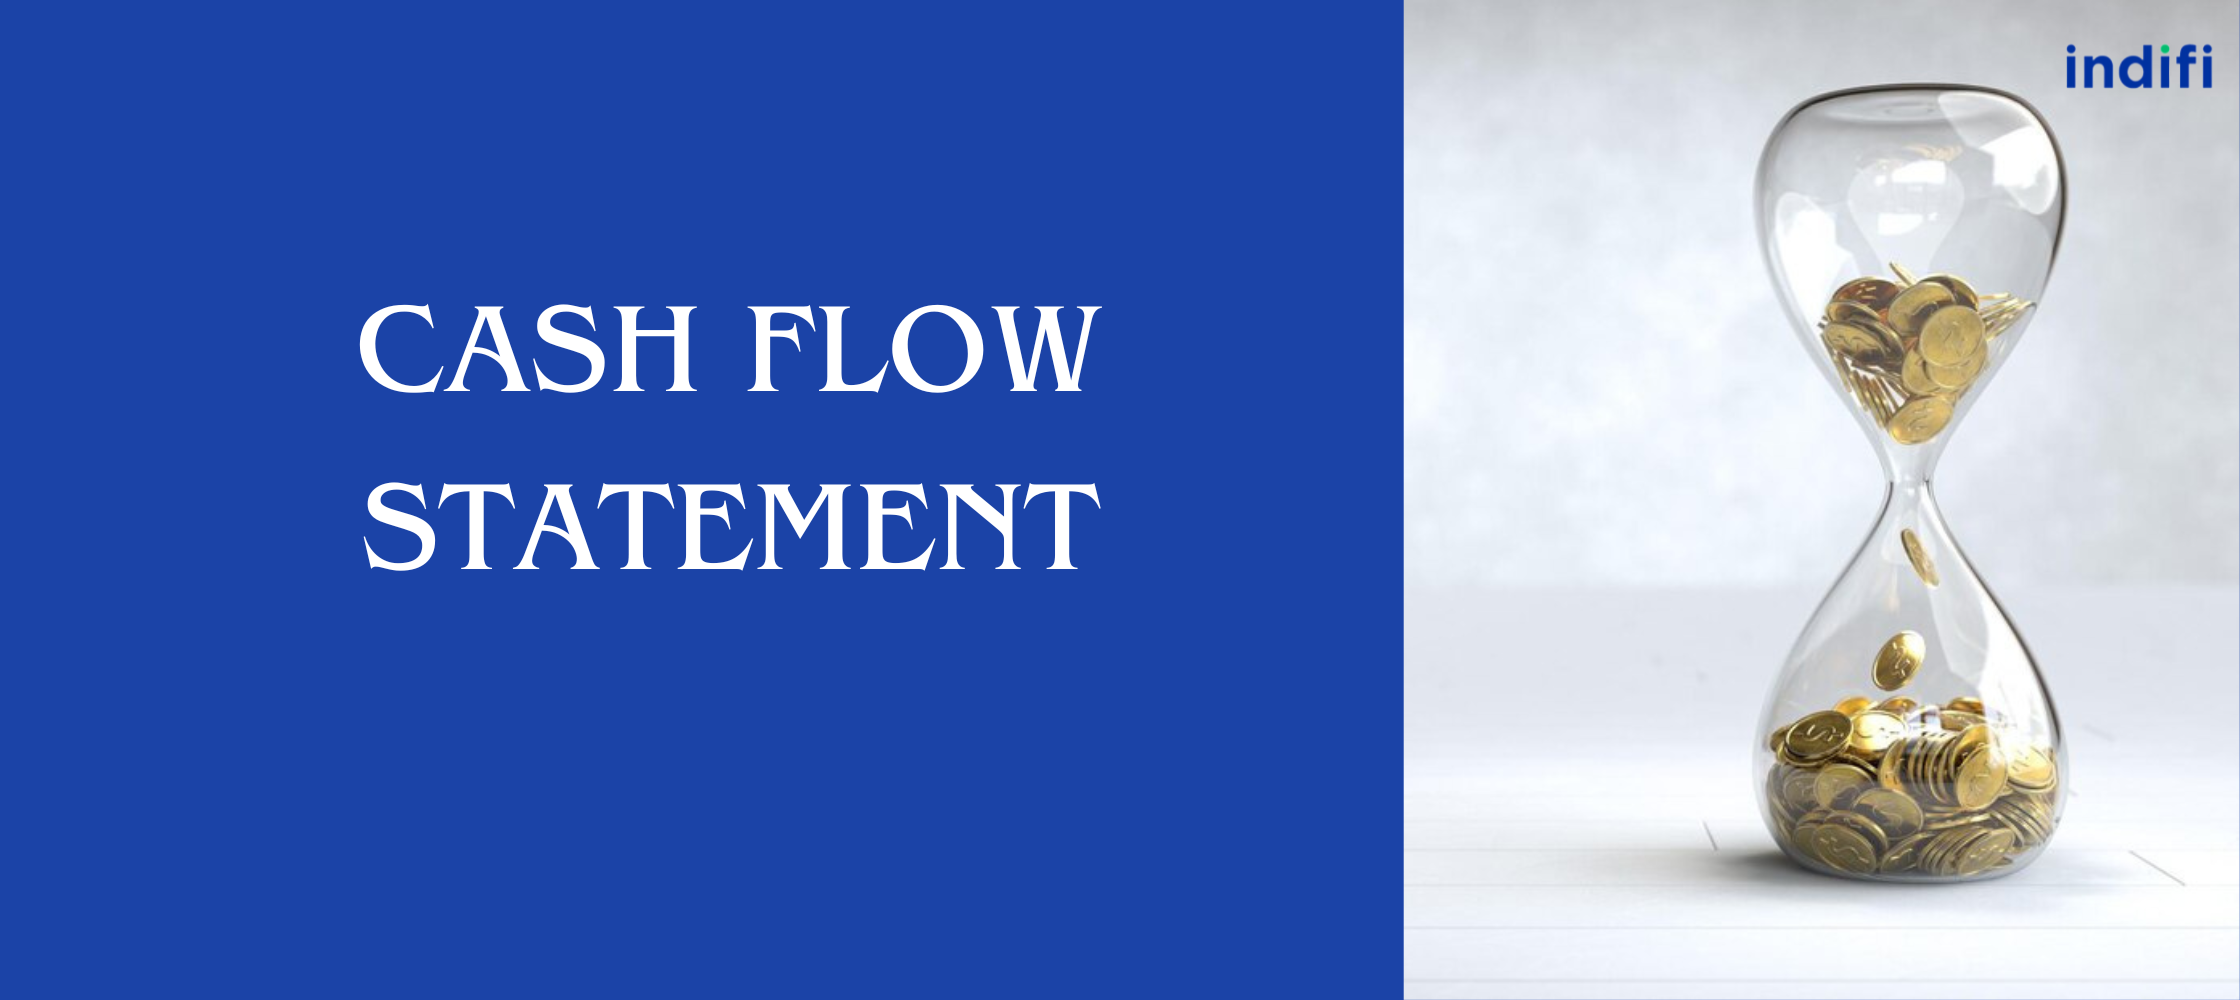 What is Cash Flow Statement